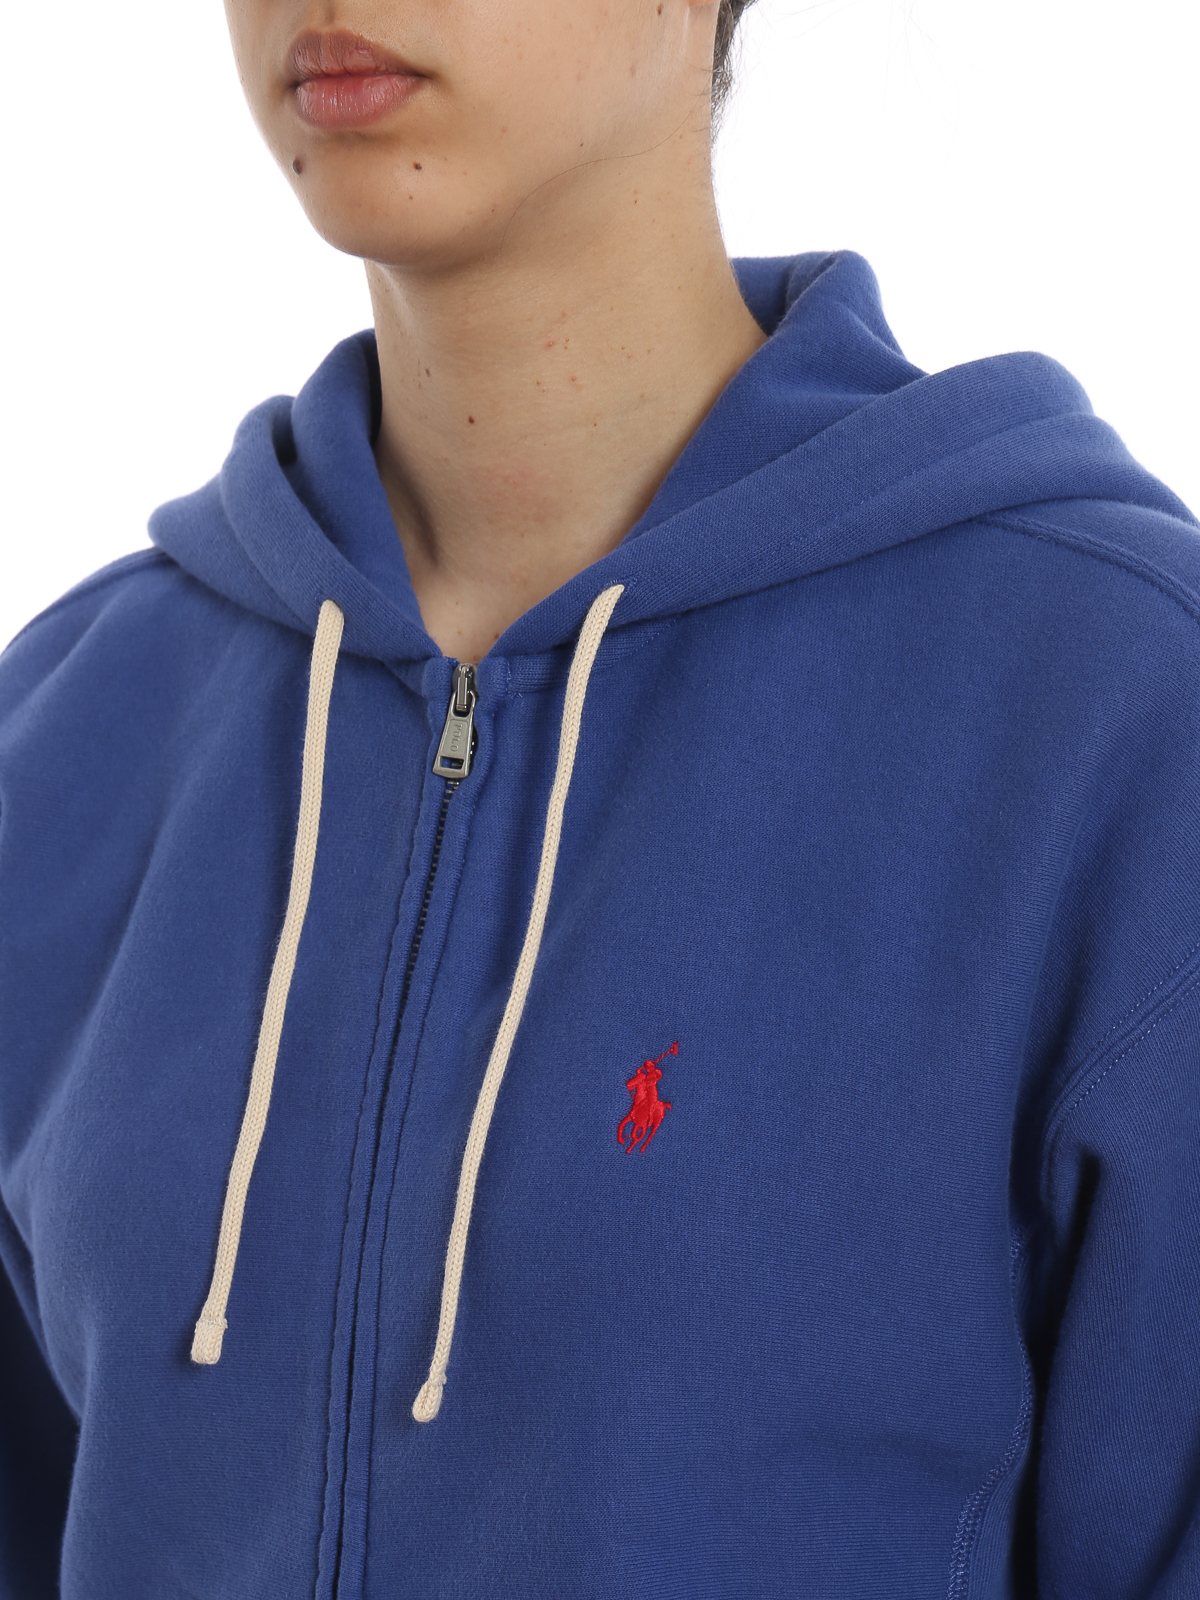 Sweatshirts & Sweaters Polo Ralph Lauren - Royal blue cotton blend hoodie -  211704753005